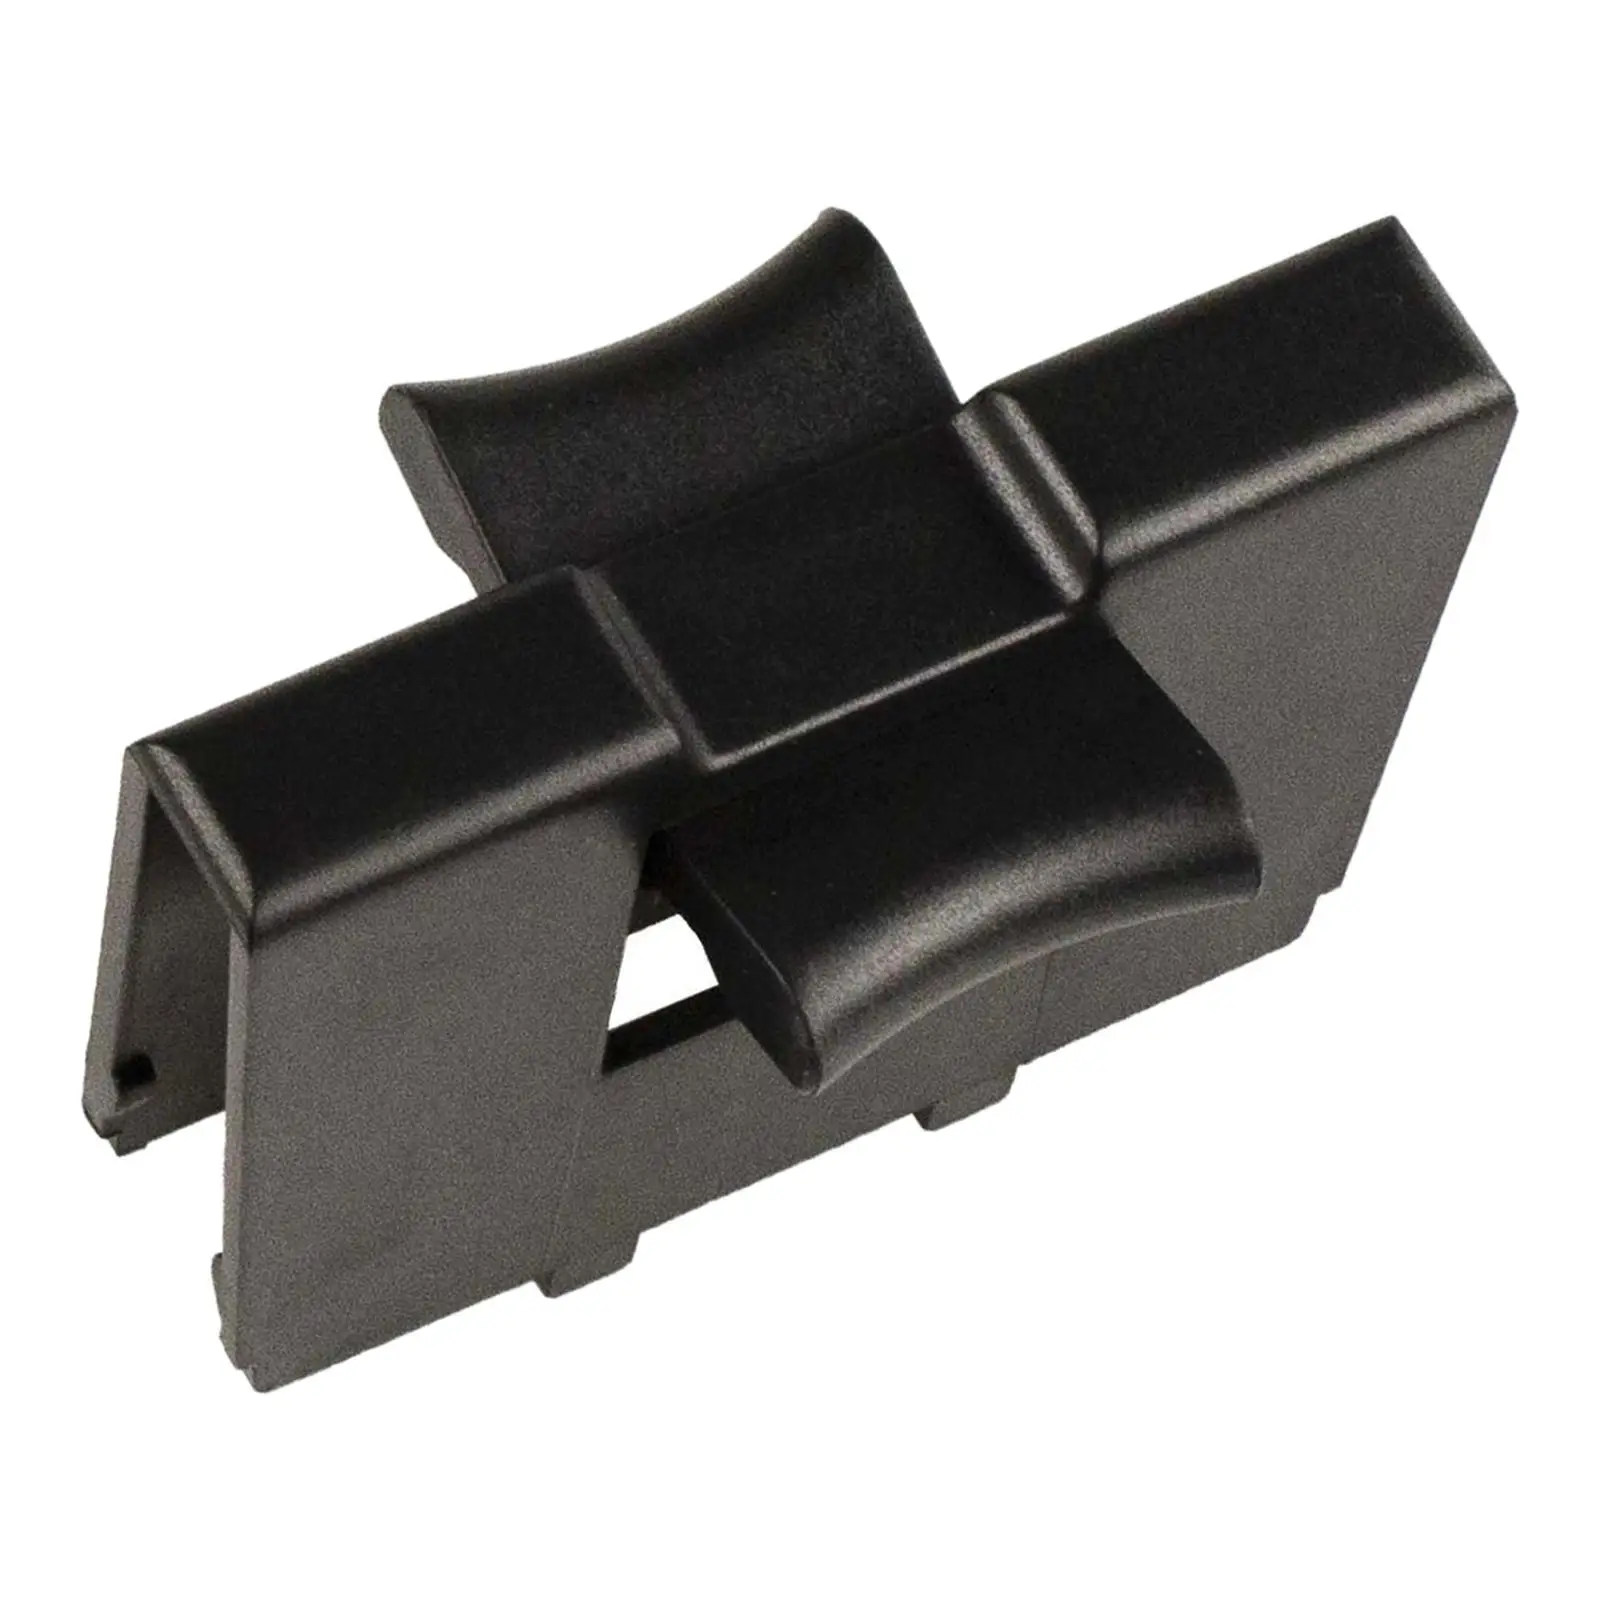 92118Aj000 Detachable Adjustable Foldable Cup Holder Divider Black Replacement